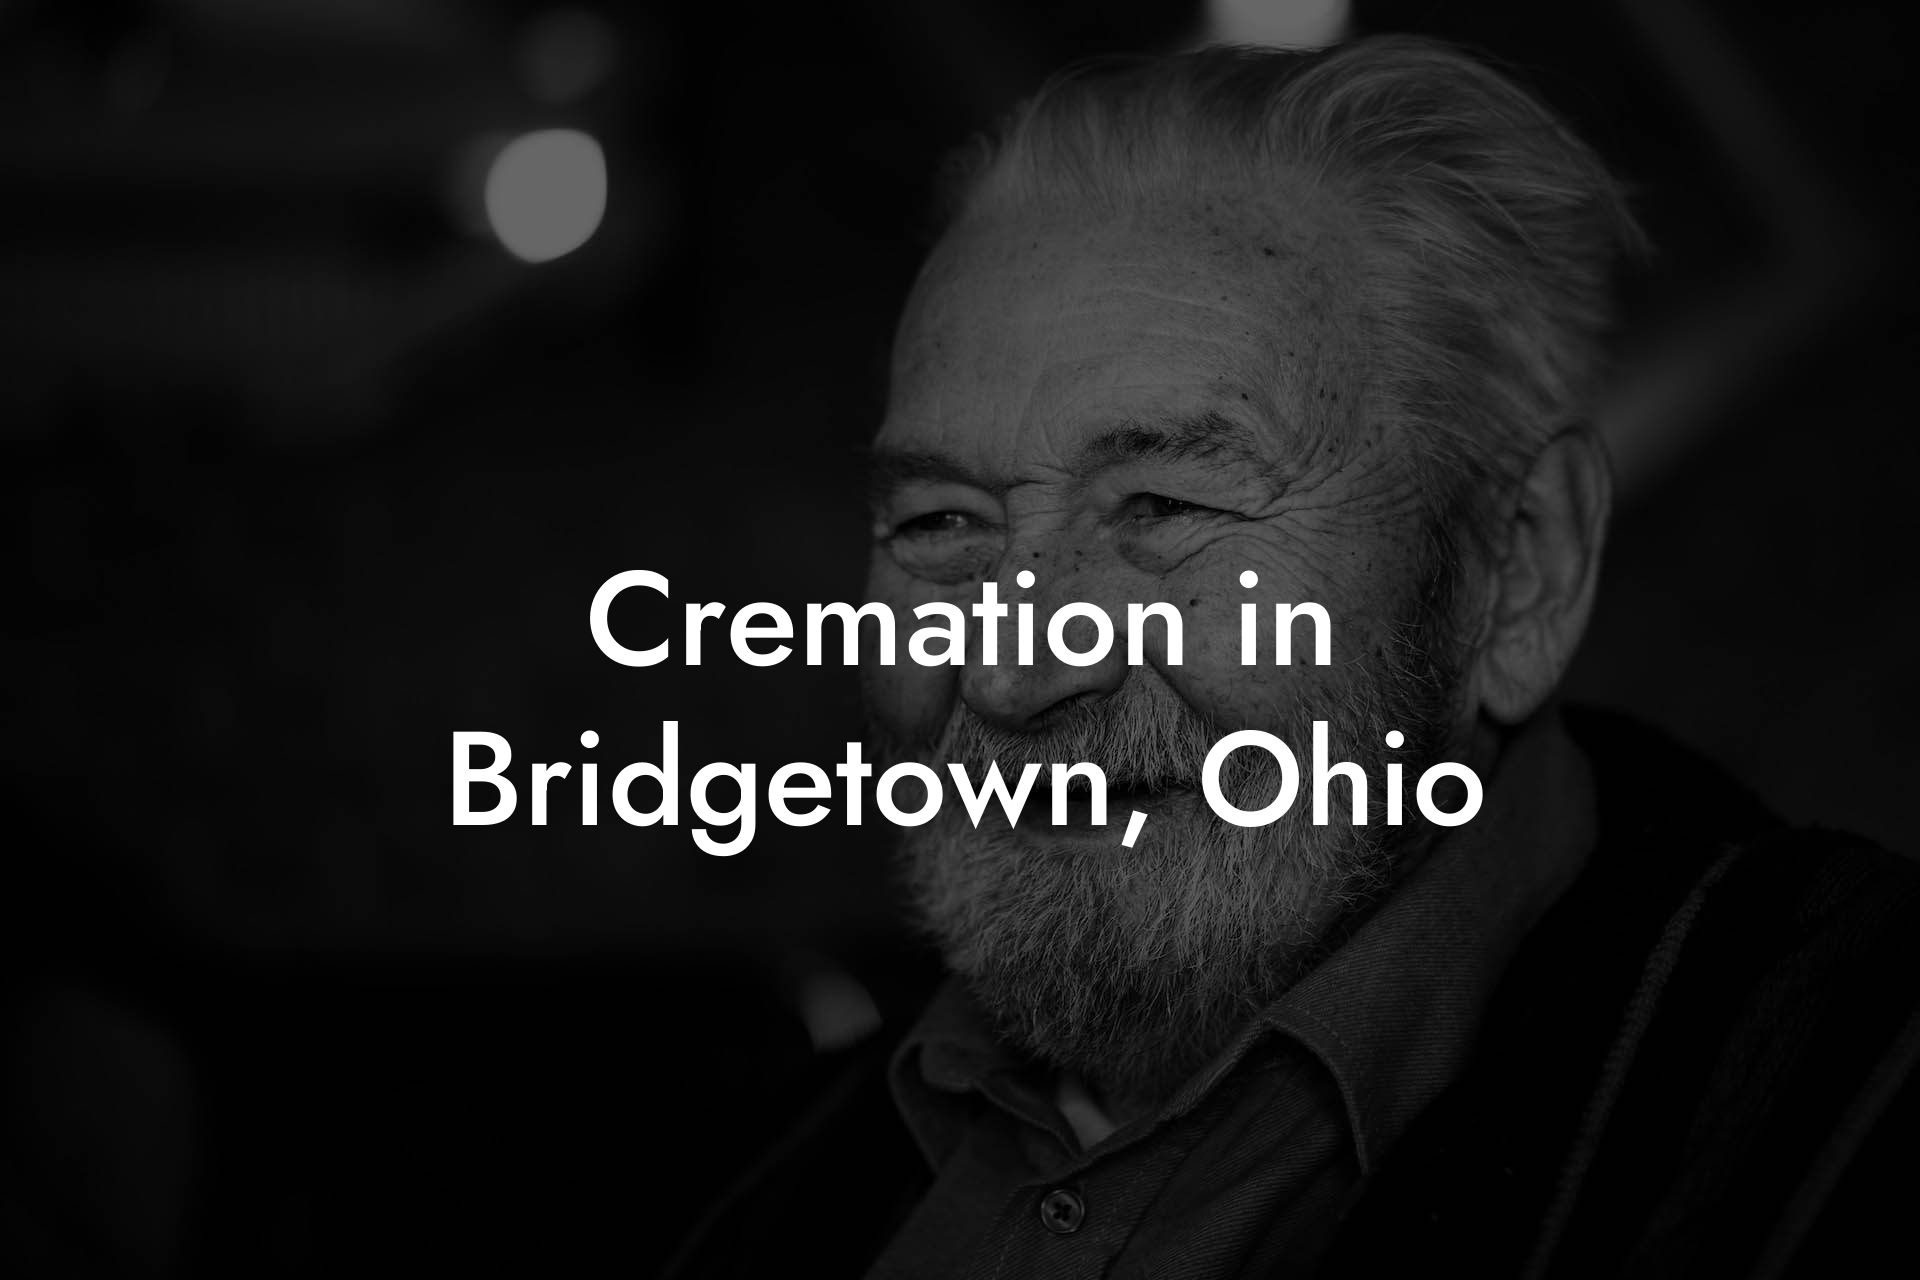 Cremation in Bridgetown, Ohio